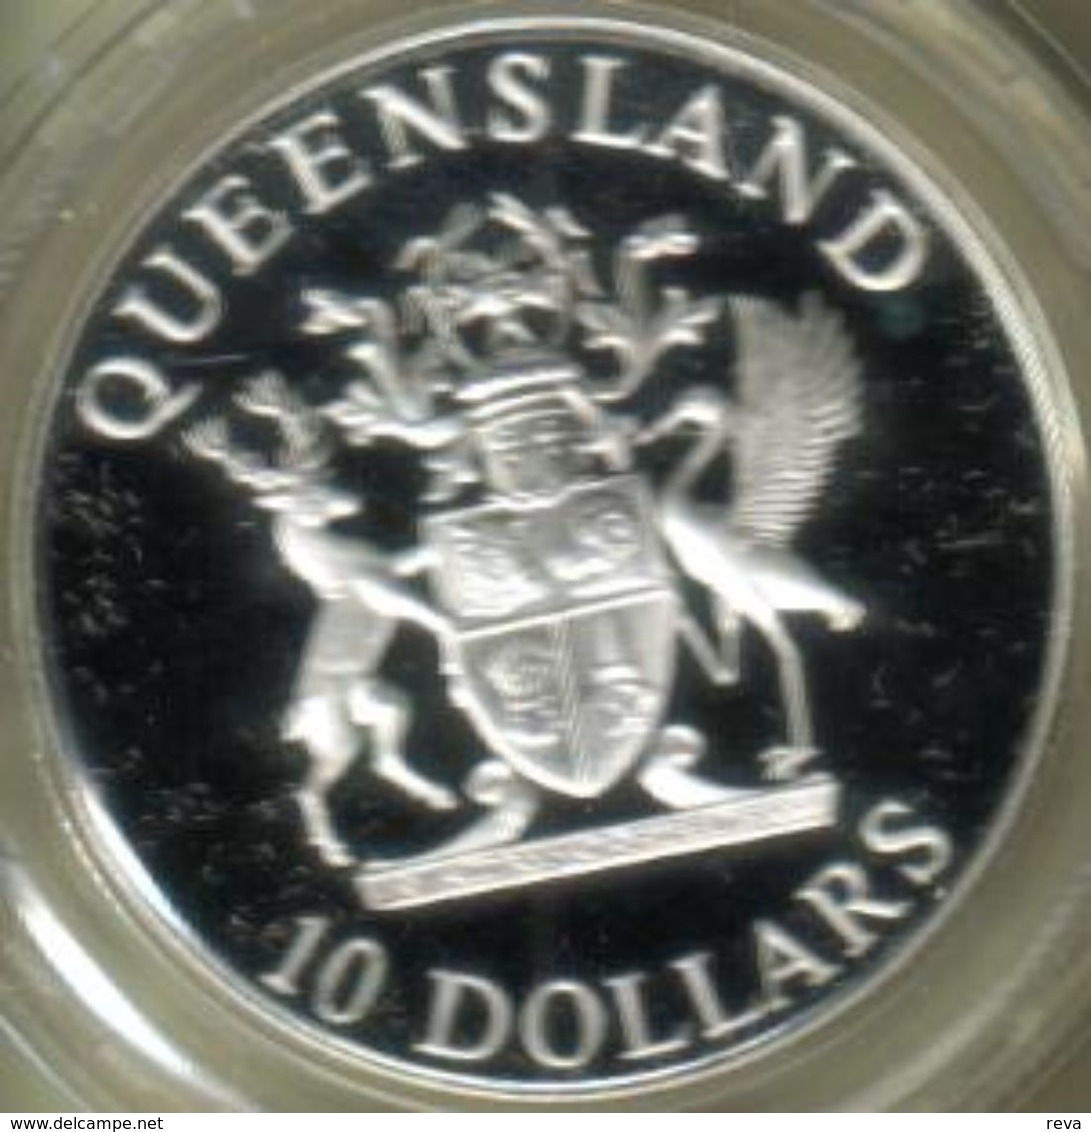 AUSTRALIA $10 STATE SERIES QUEENSLAND 1989 SILVER PROOF KM? CV$45A  READ DESCRIPTION CAREFULLY !!! - 10 Dollars